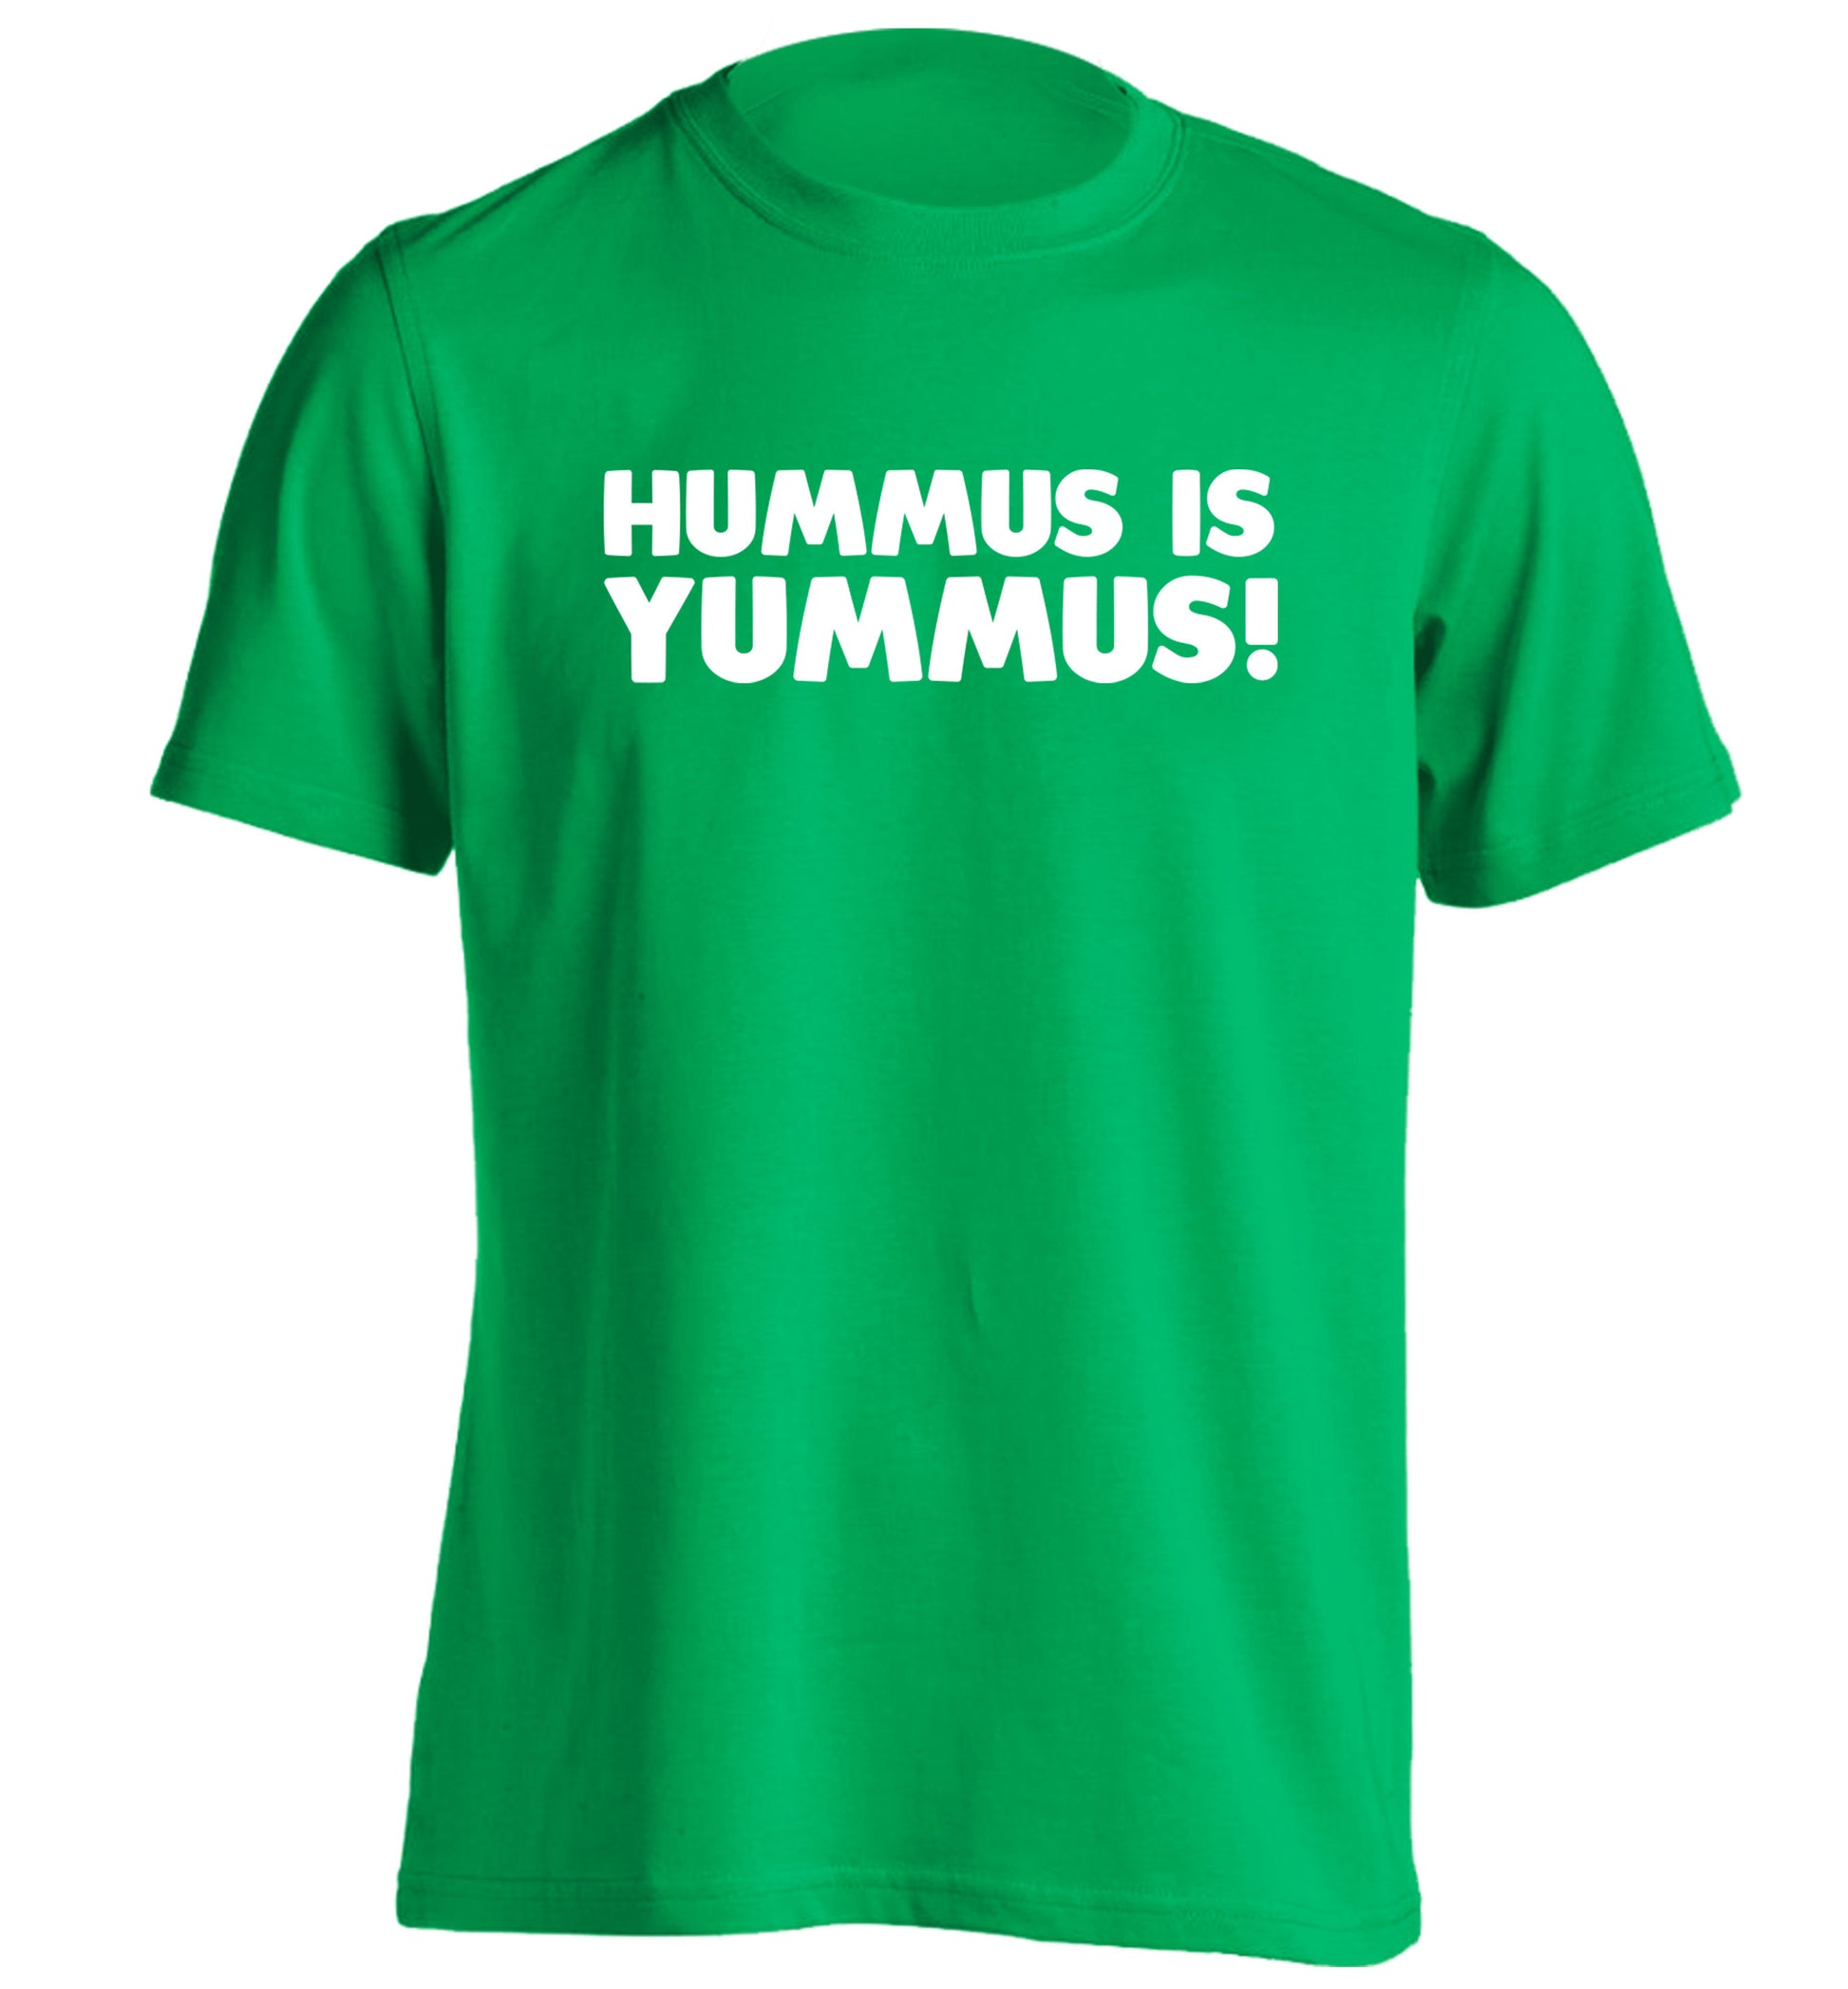 Hummus is Yummus  adults unisex green Tshirt 2XL